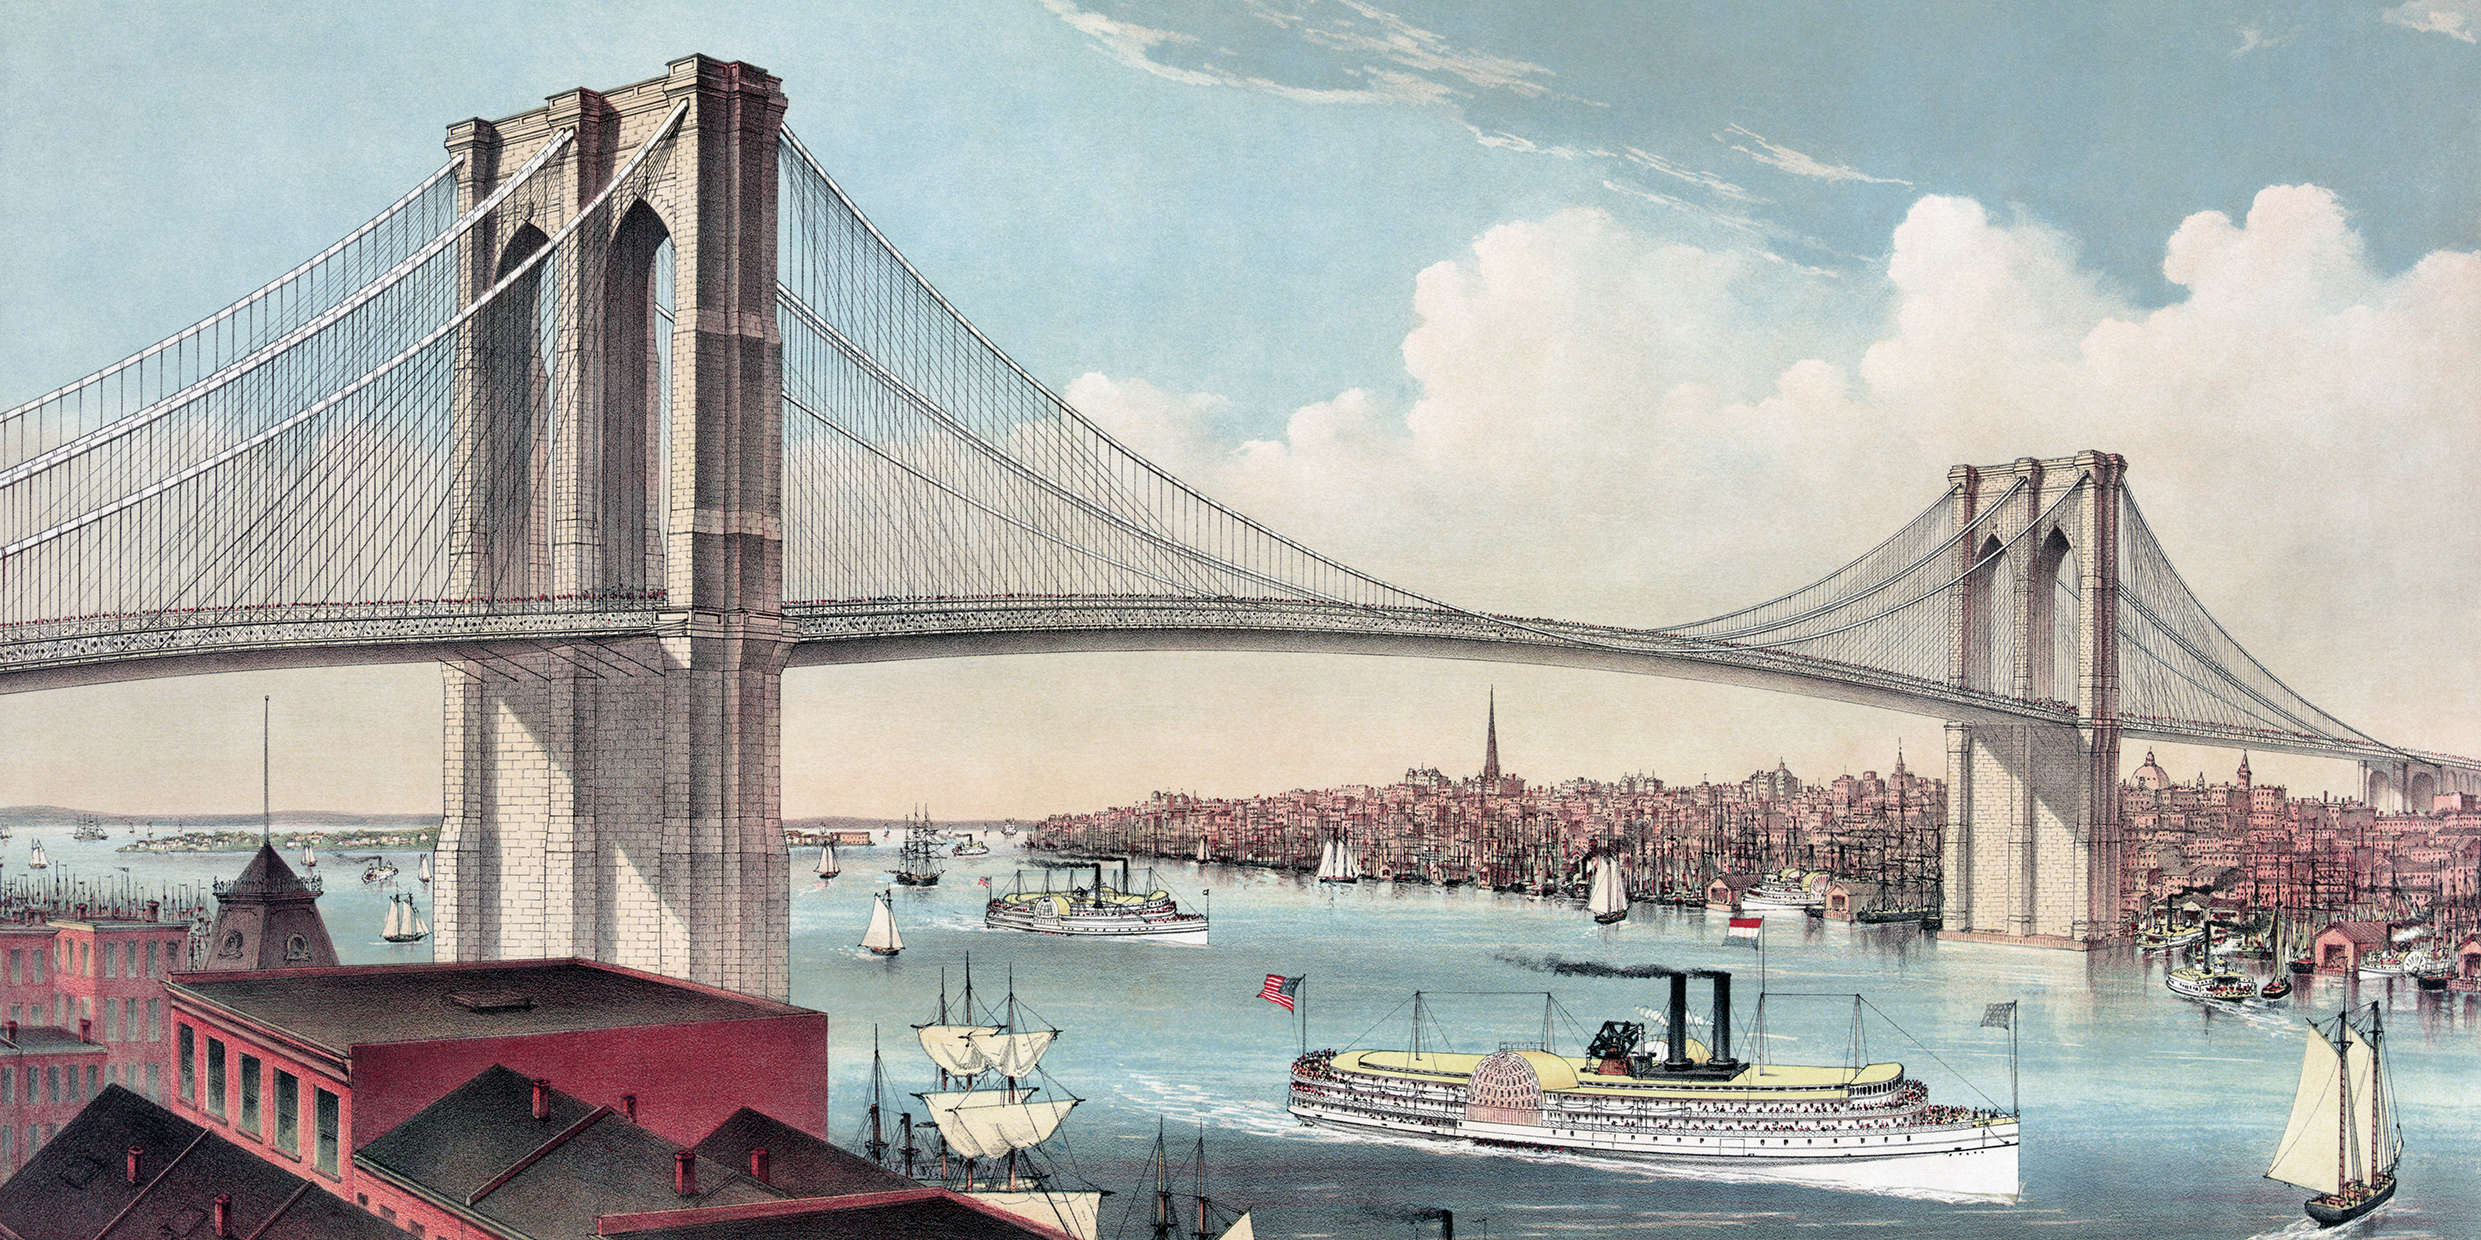 Illustration of the Brooklyn Bridge in 1883